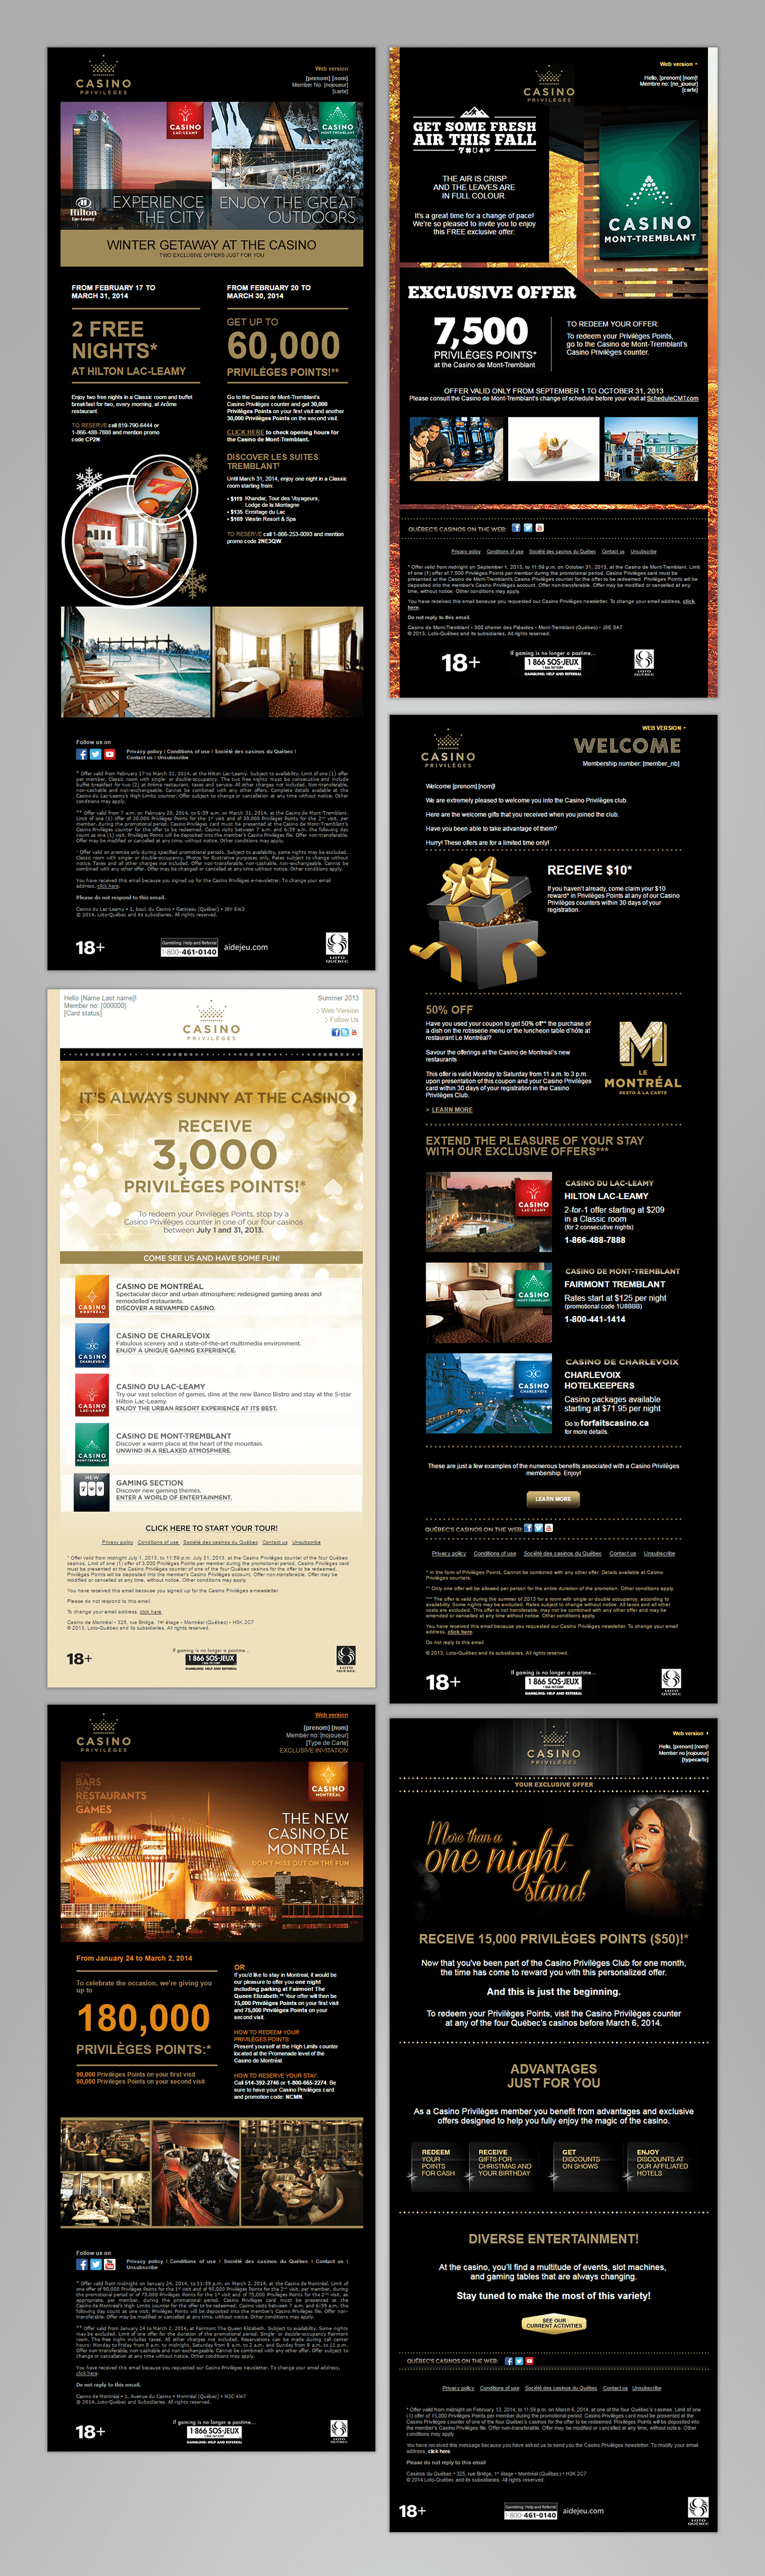 Screen captures of Casinos du Québec's promotional emails